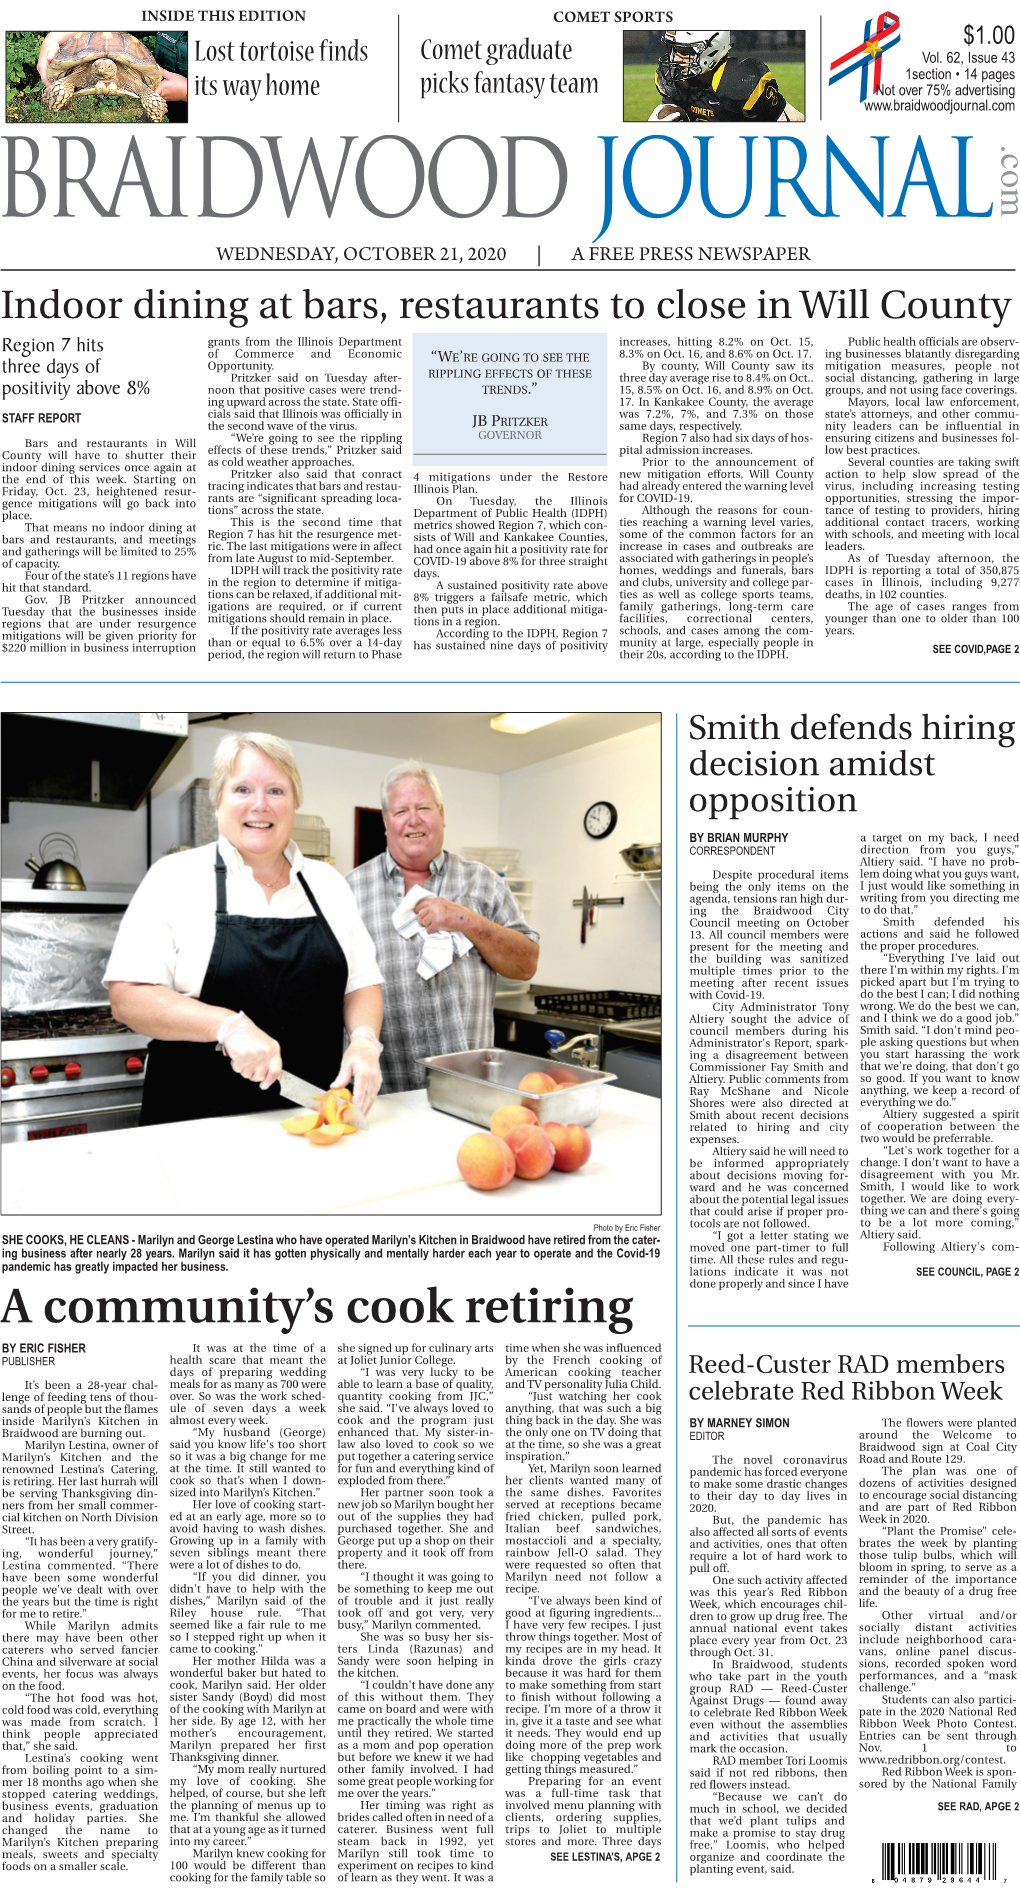 A Community's Cook Retiring